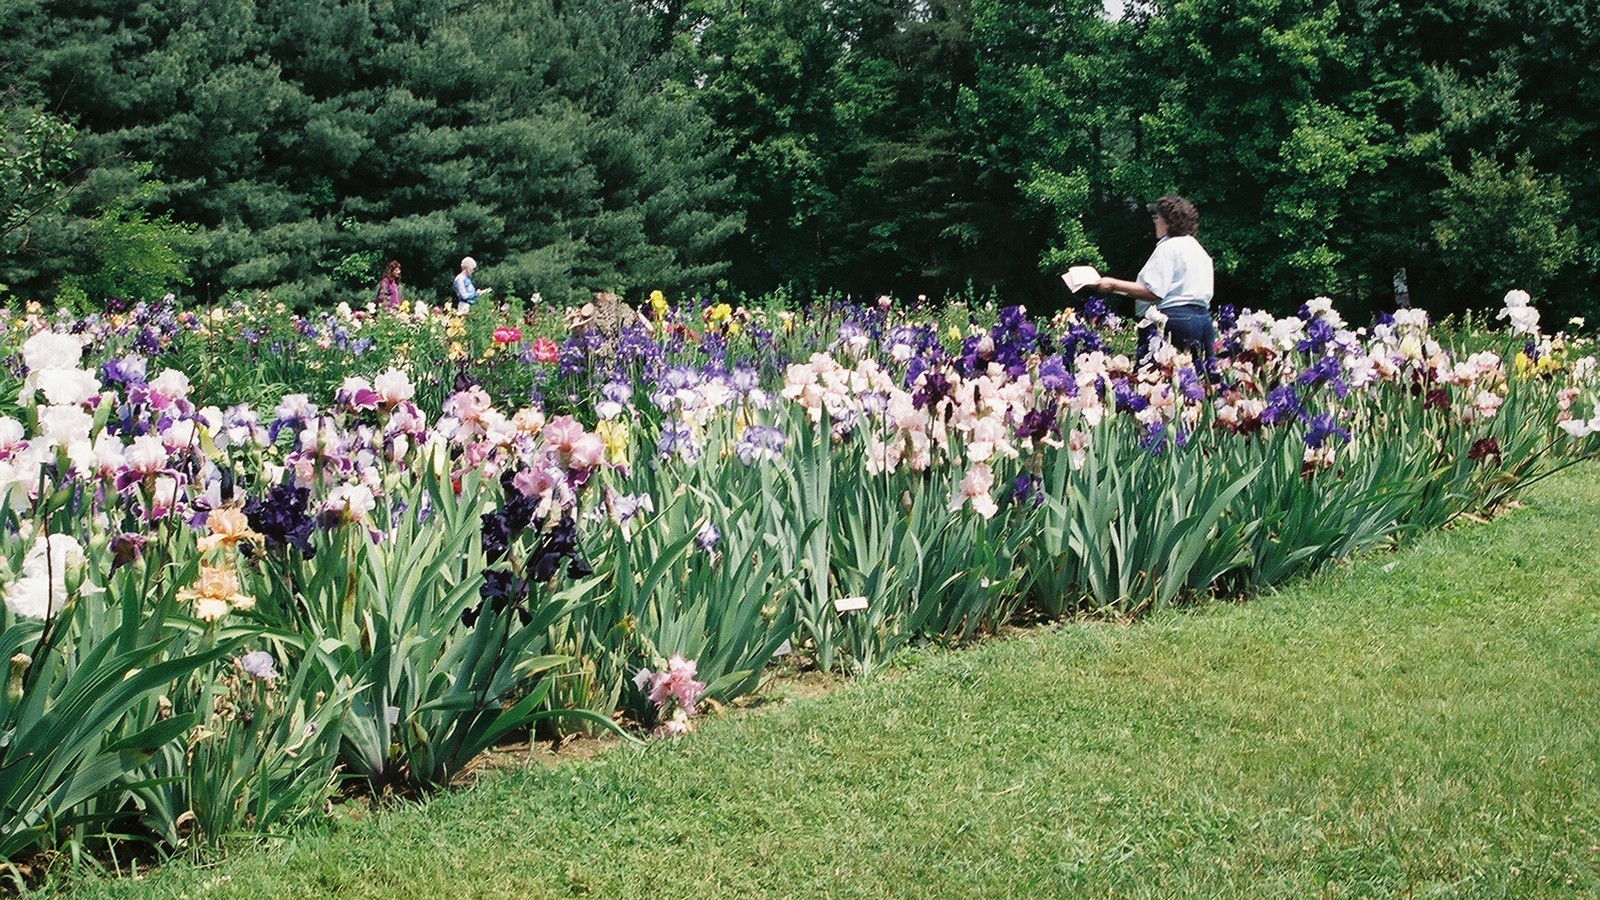 Margaret Thomas' Garden, Herndon, VA